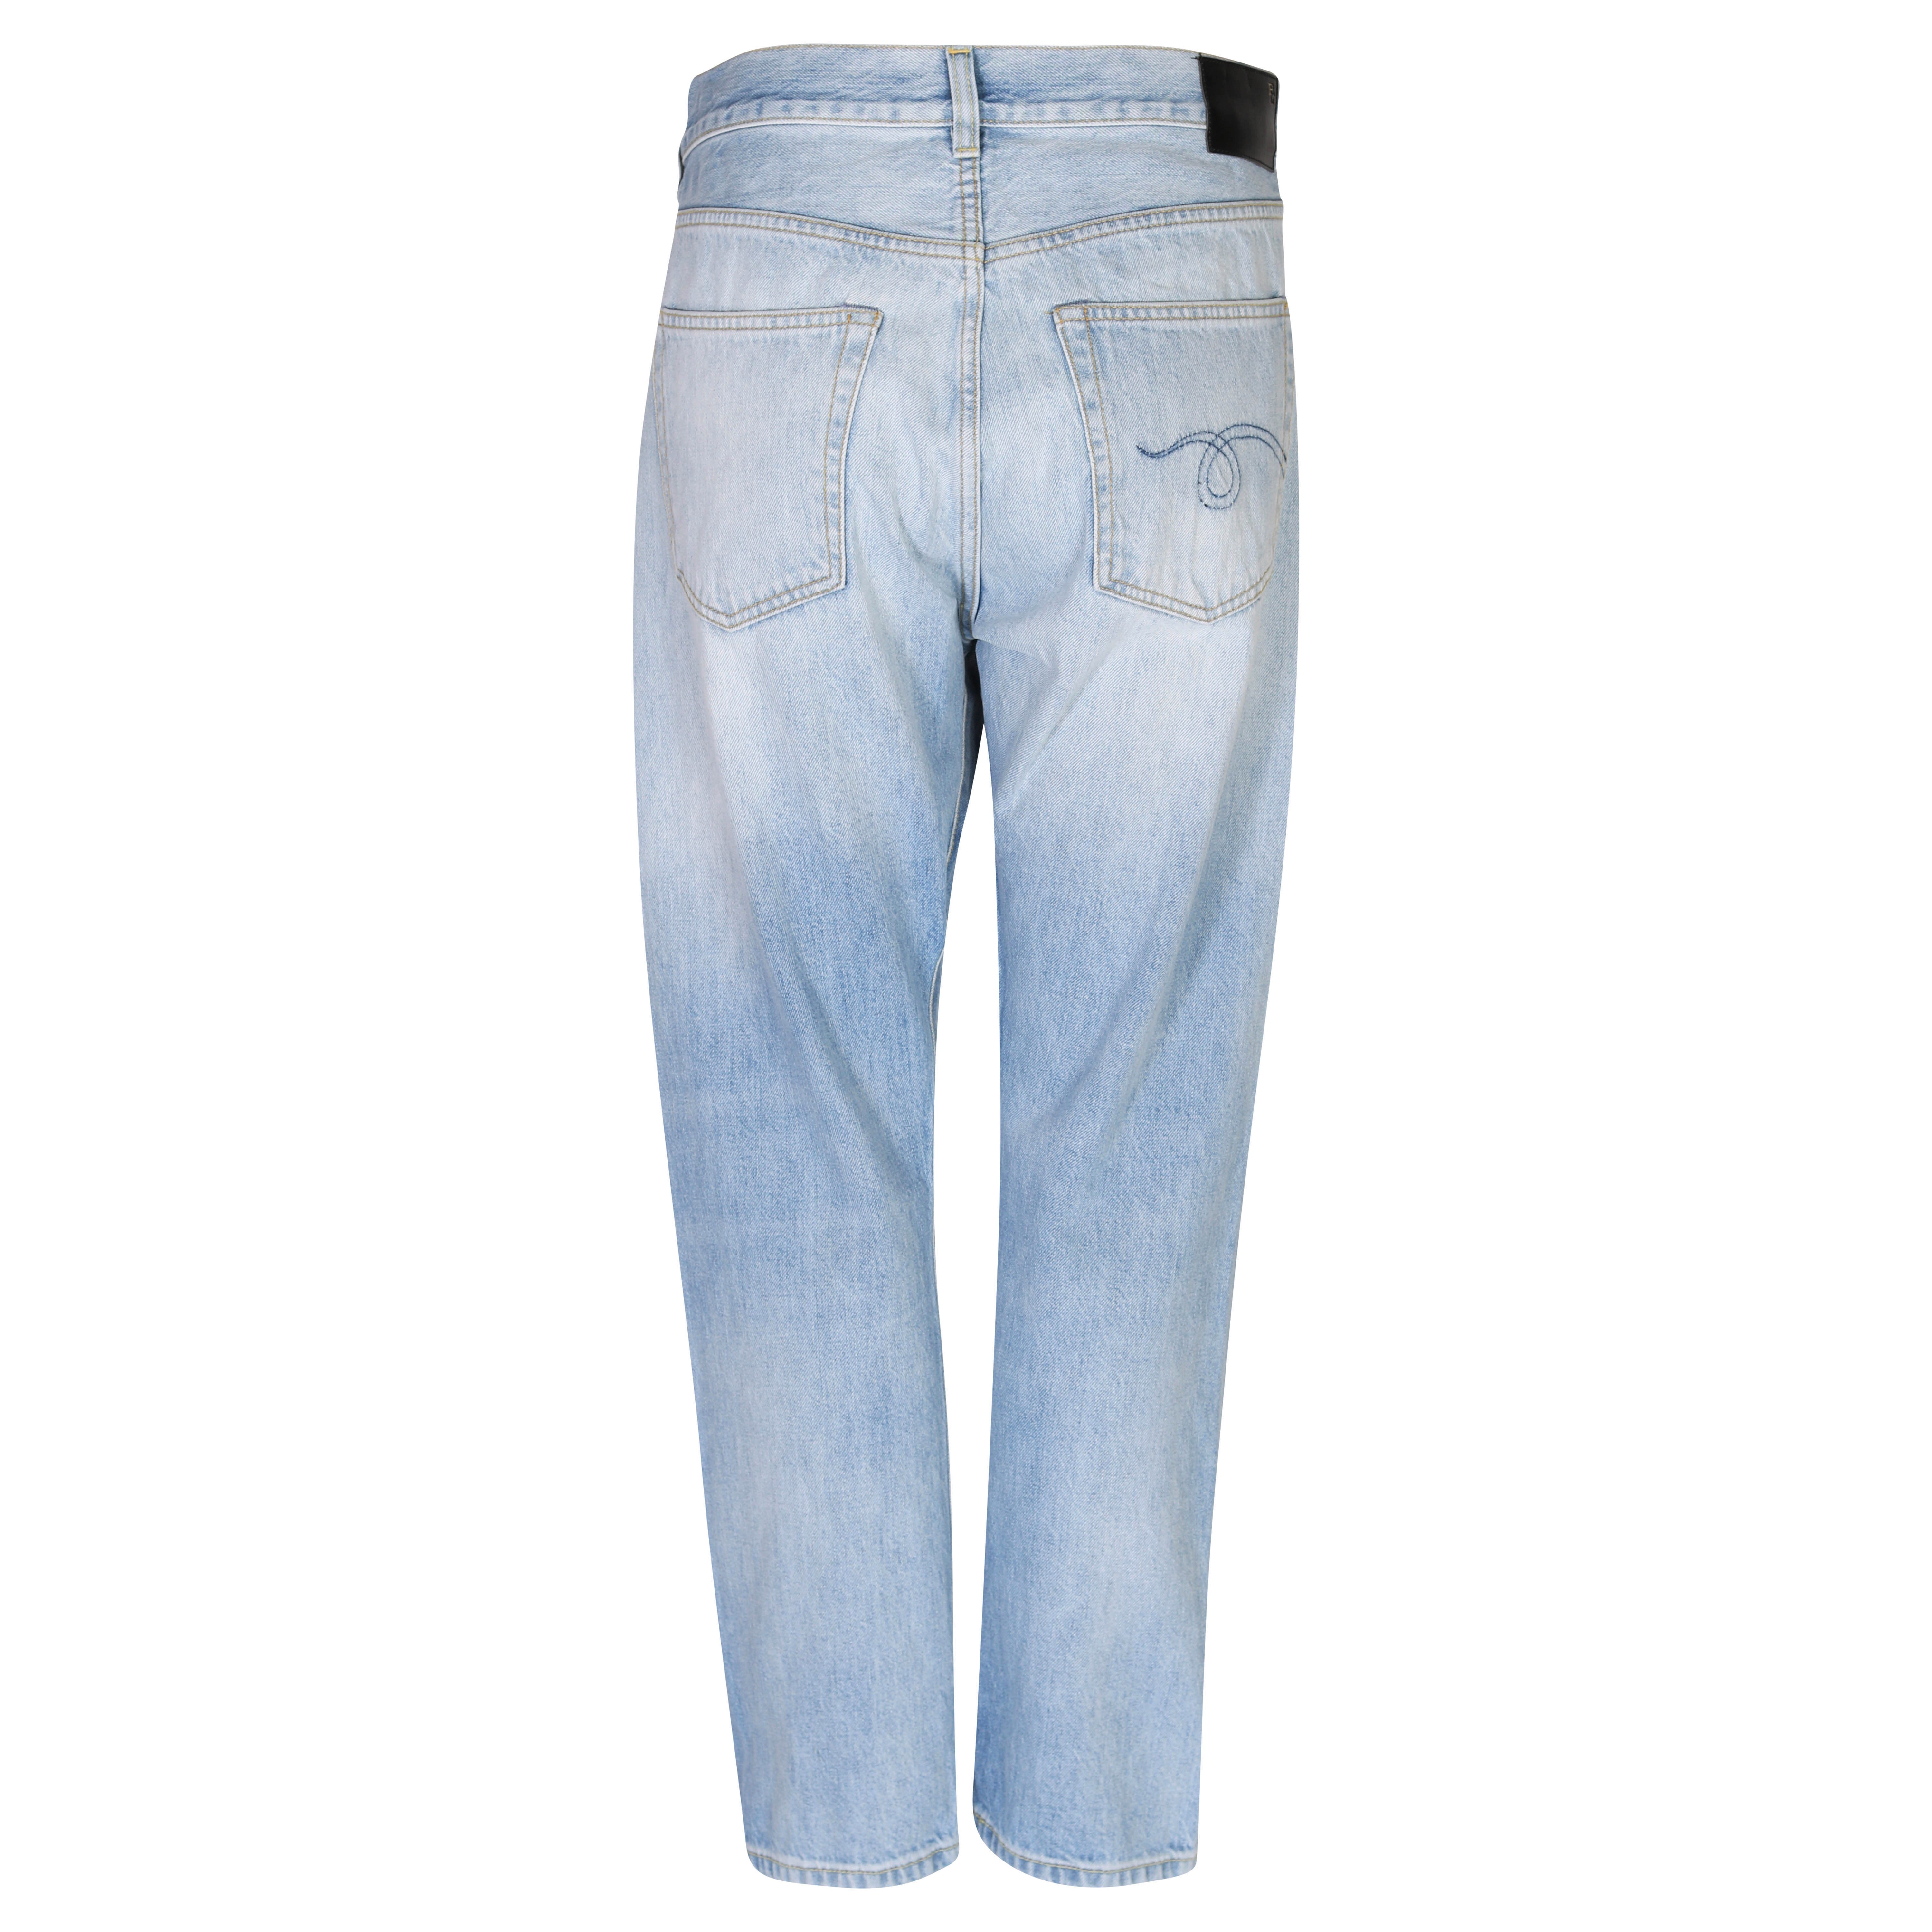 R13 Cross Over Jeans in Stevie Blue 30